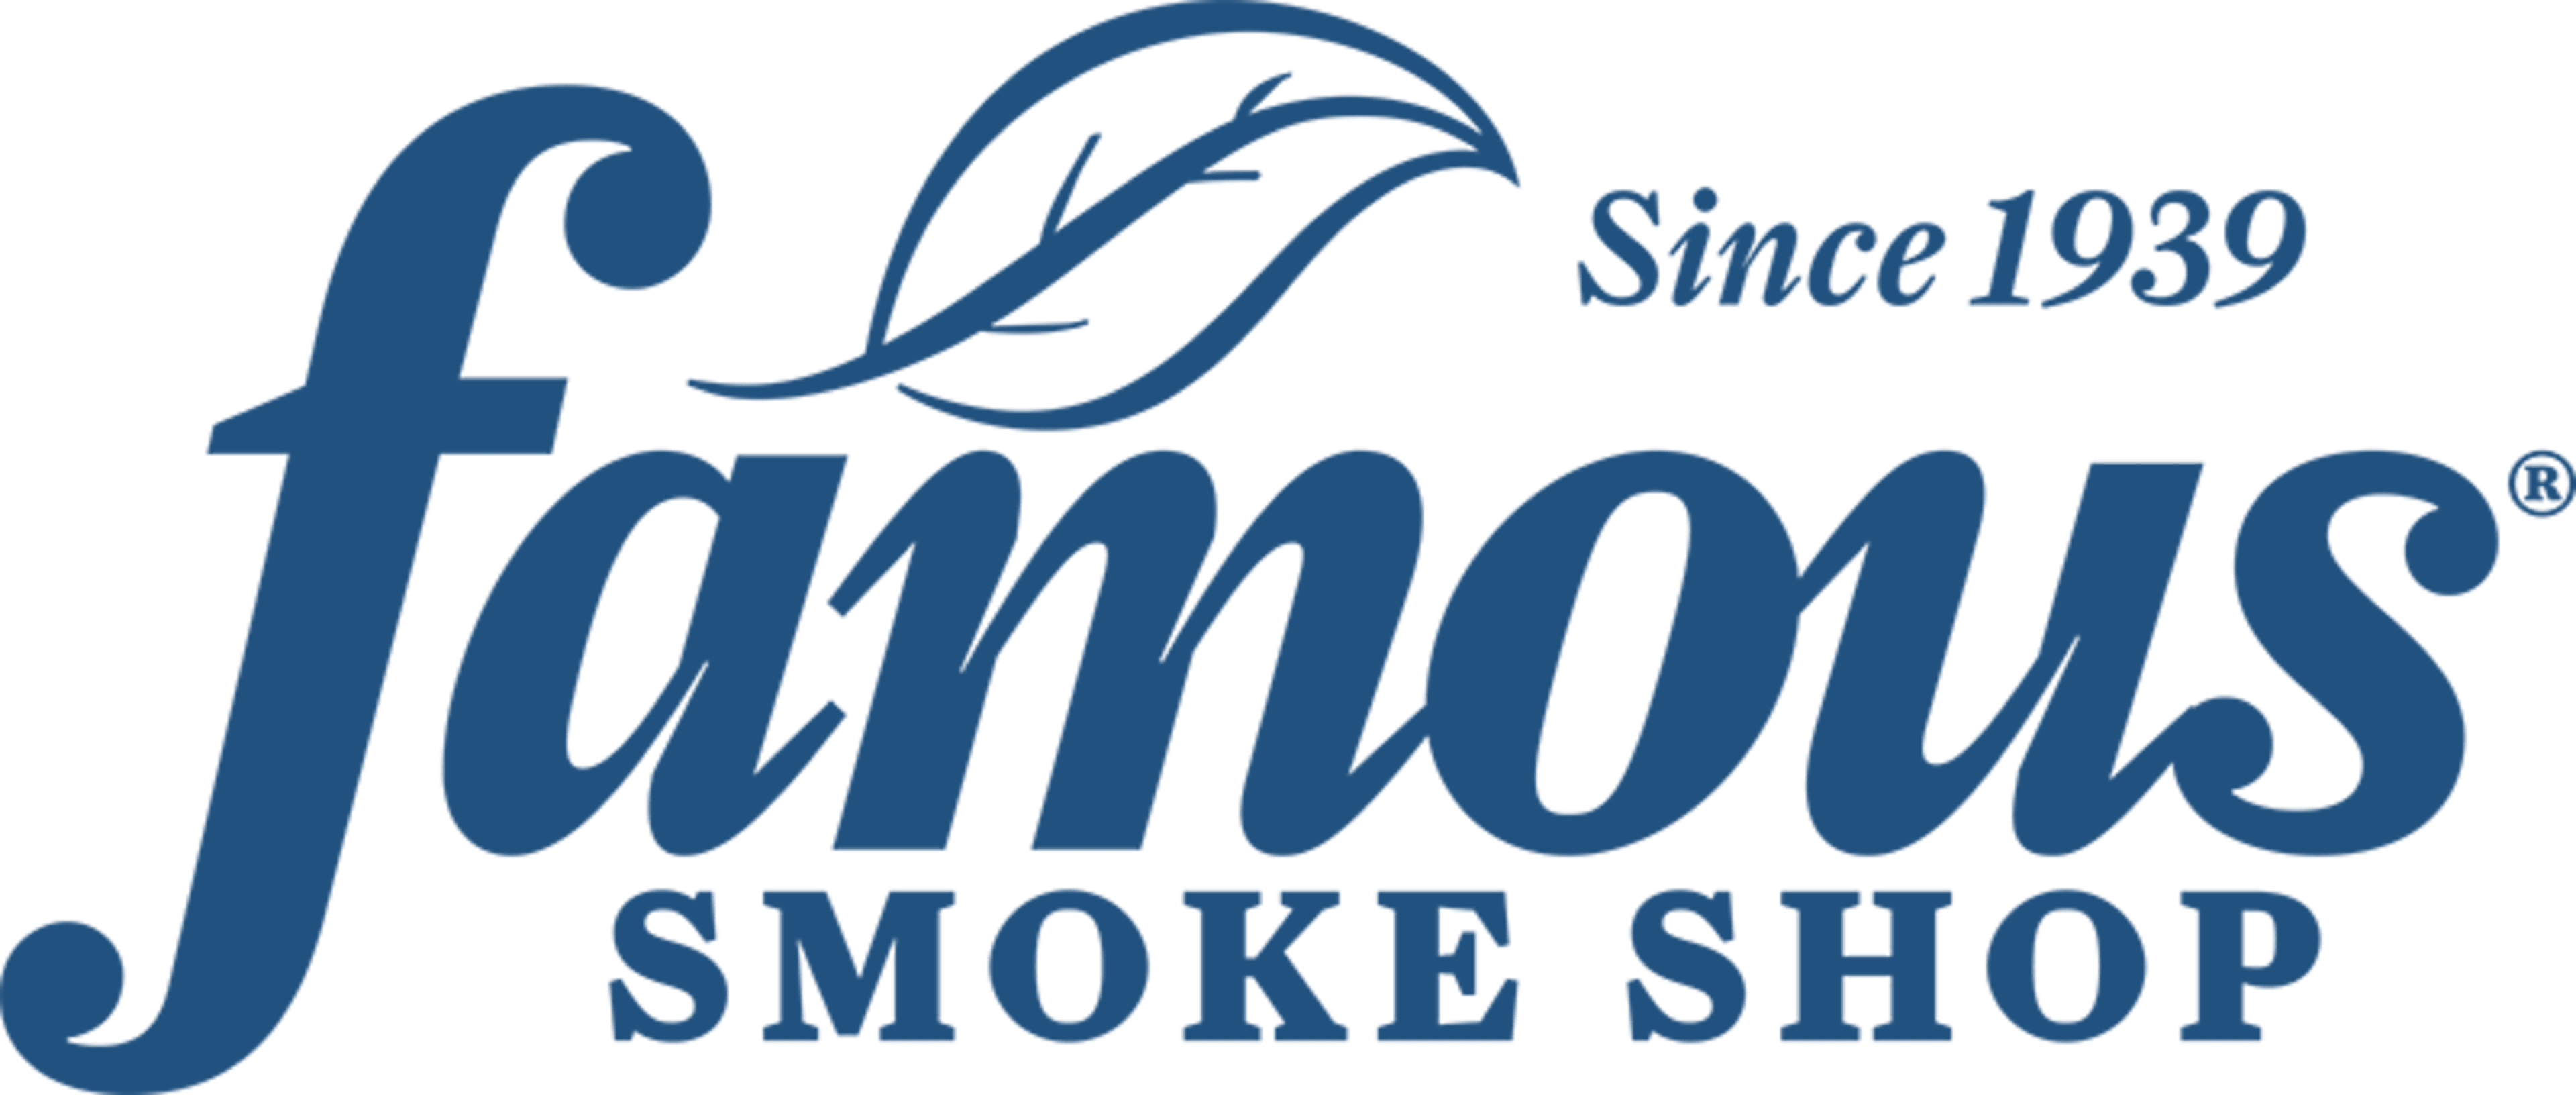 Famous Smoke ShopCode